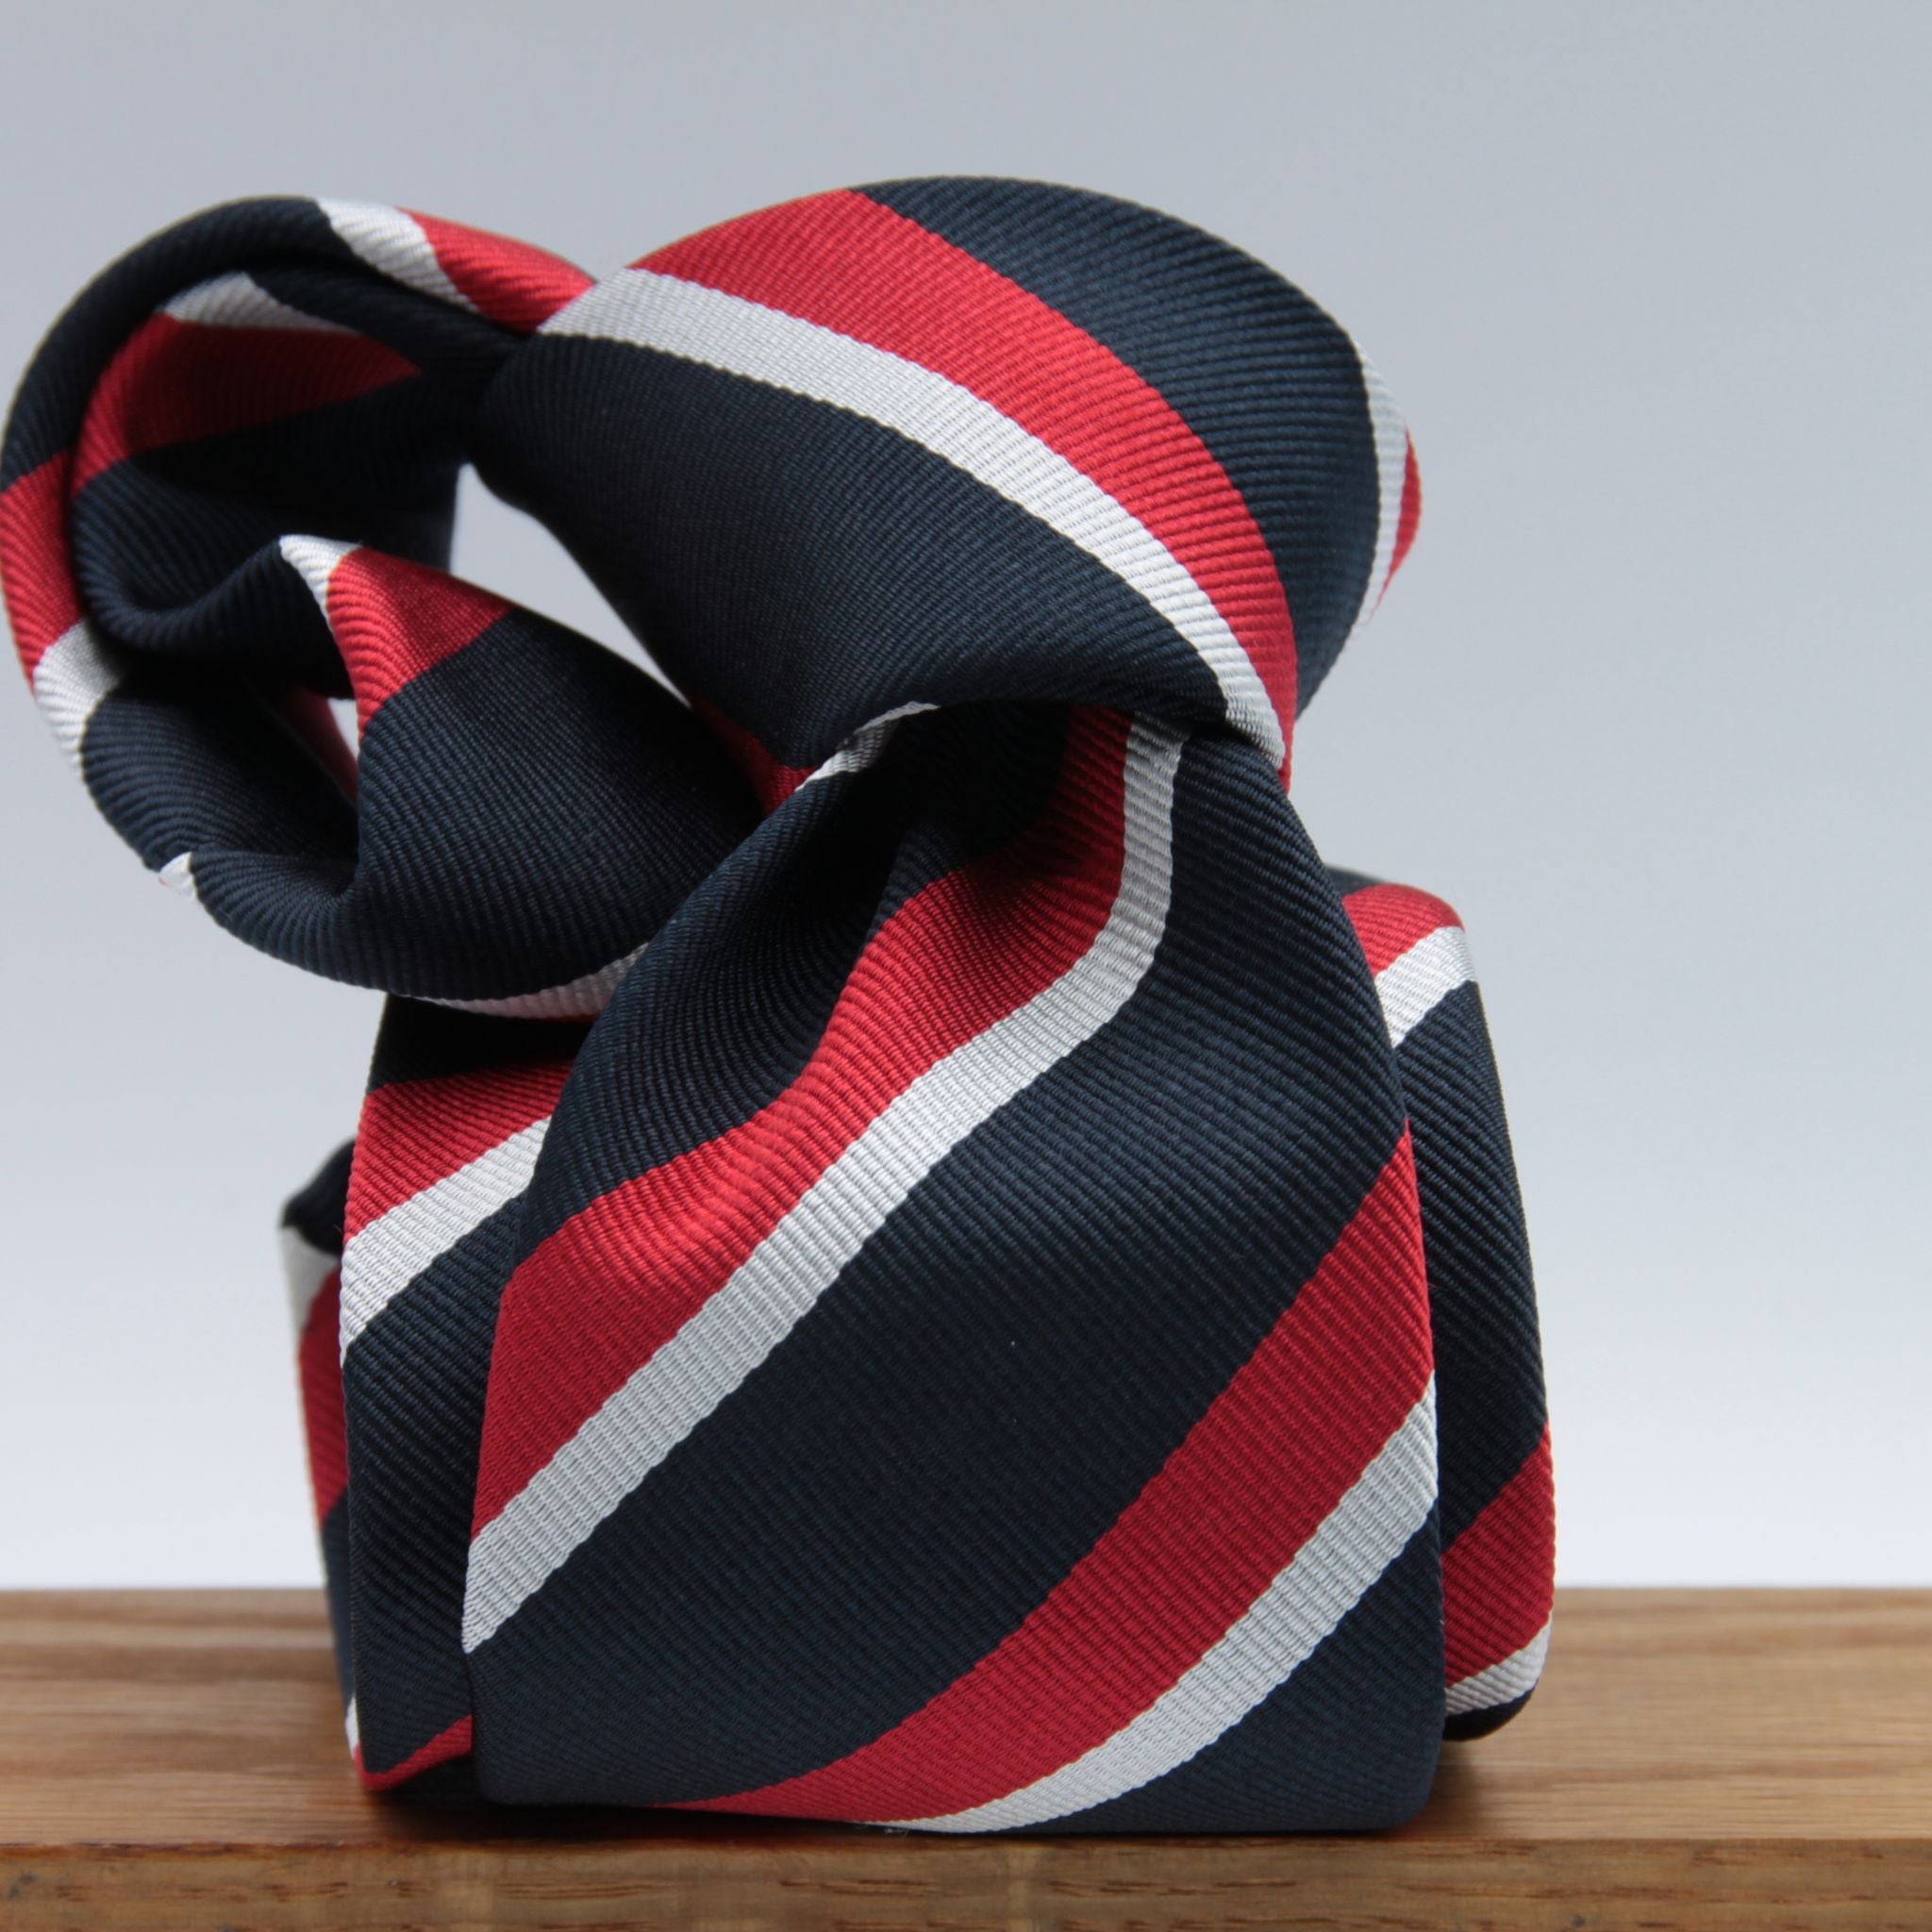 Cruciani & Bella 100% Silk Slim Shape Jacquard  Unlined Regimental "Royal Navy" Navy, White and Red stripes tie Handmade in Italy 8 cm x 150 cm #7709